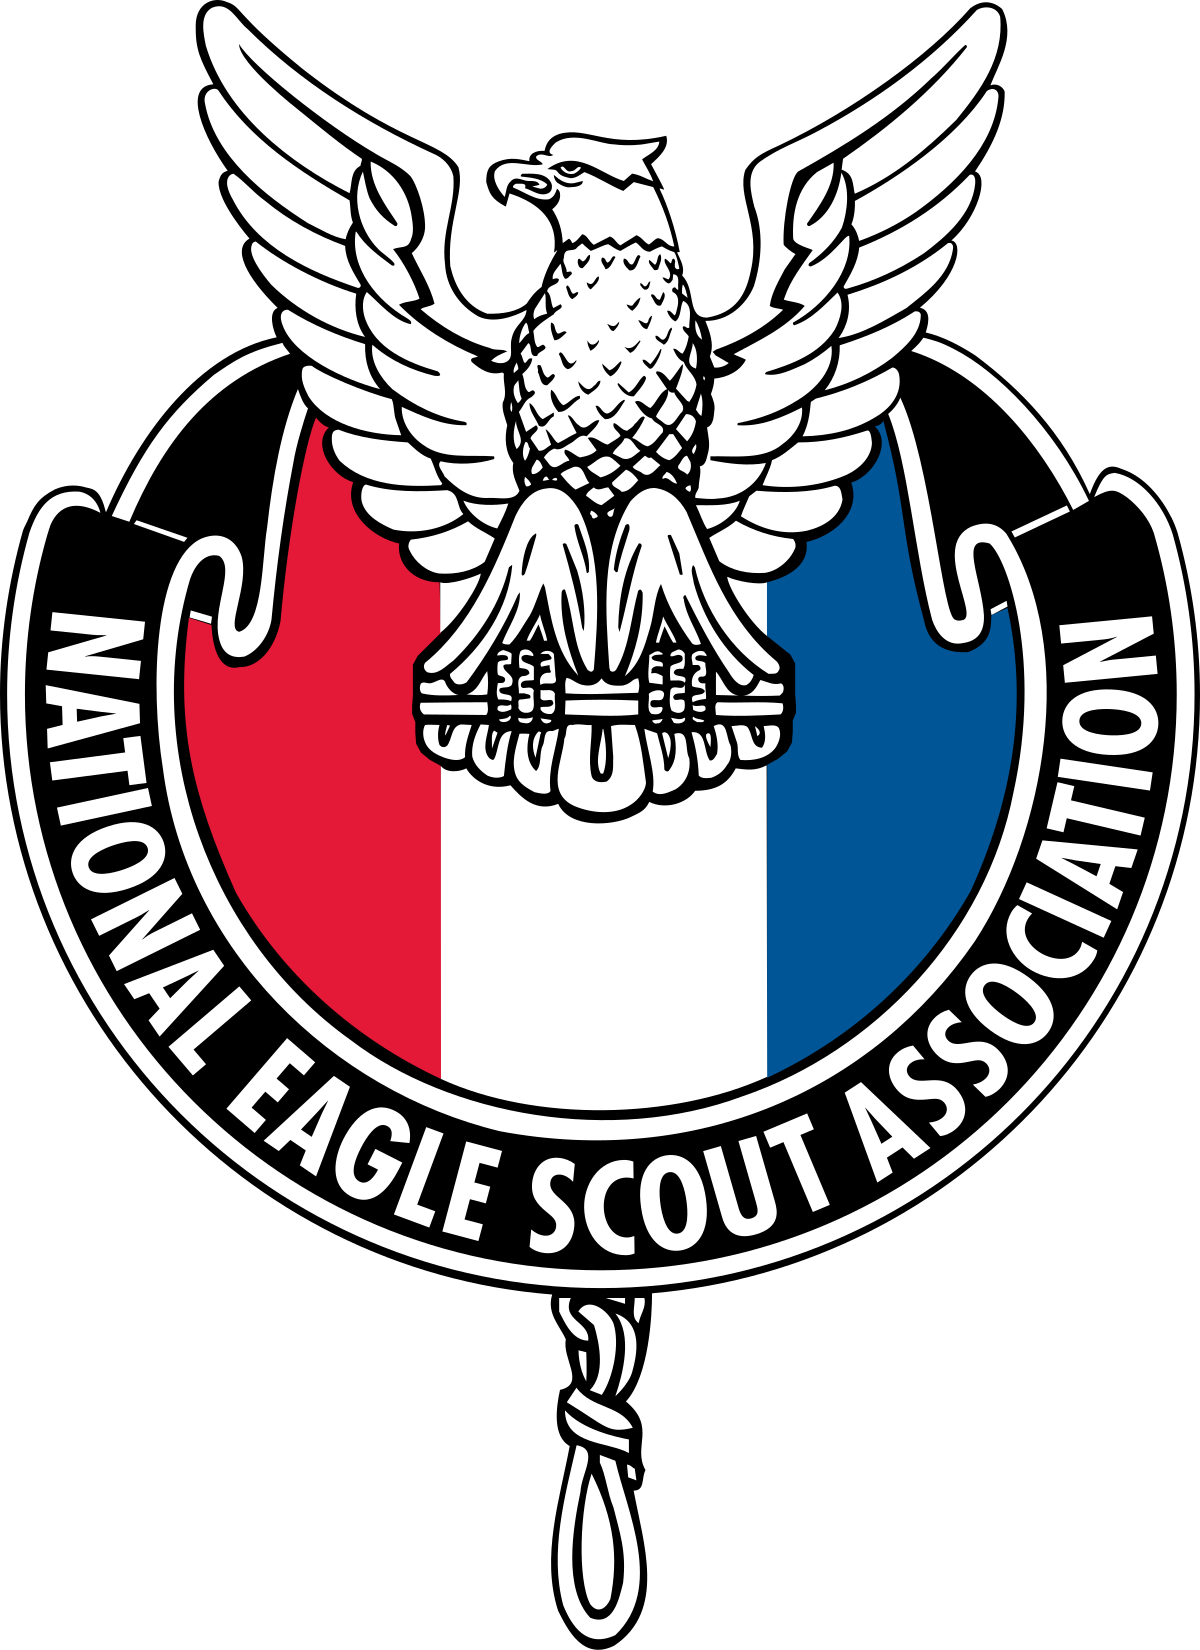 National Eagle Scout Association Wikipedia